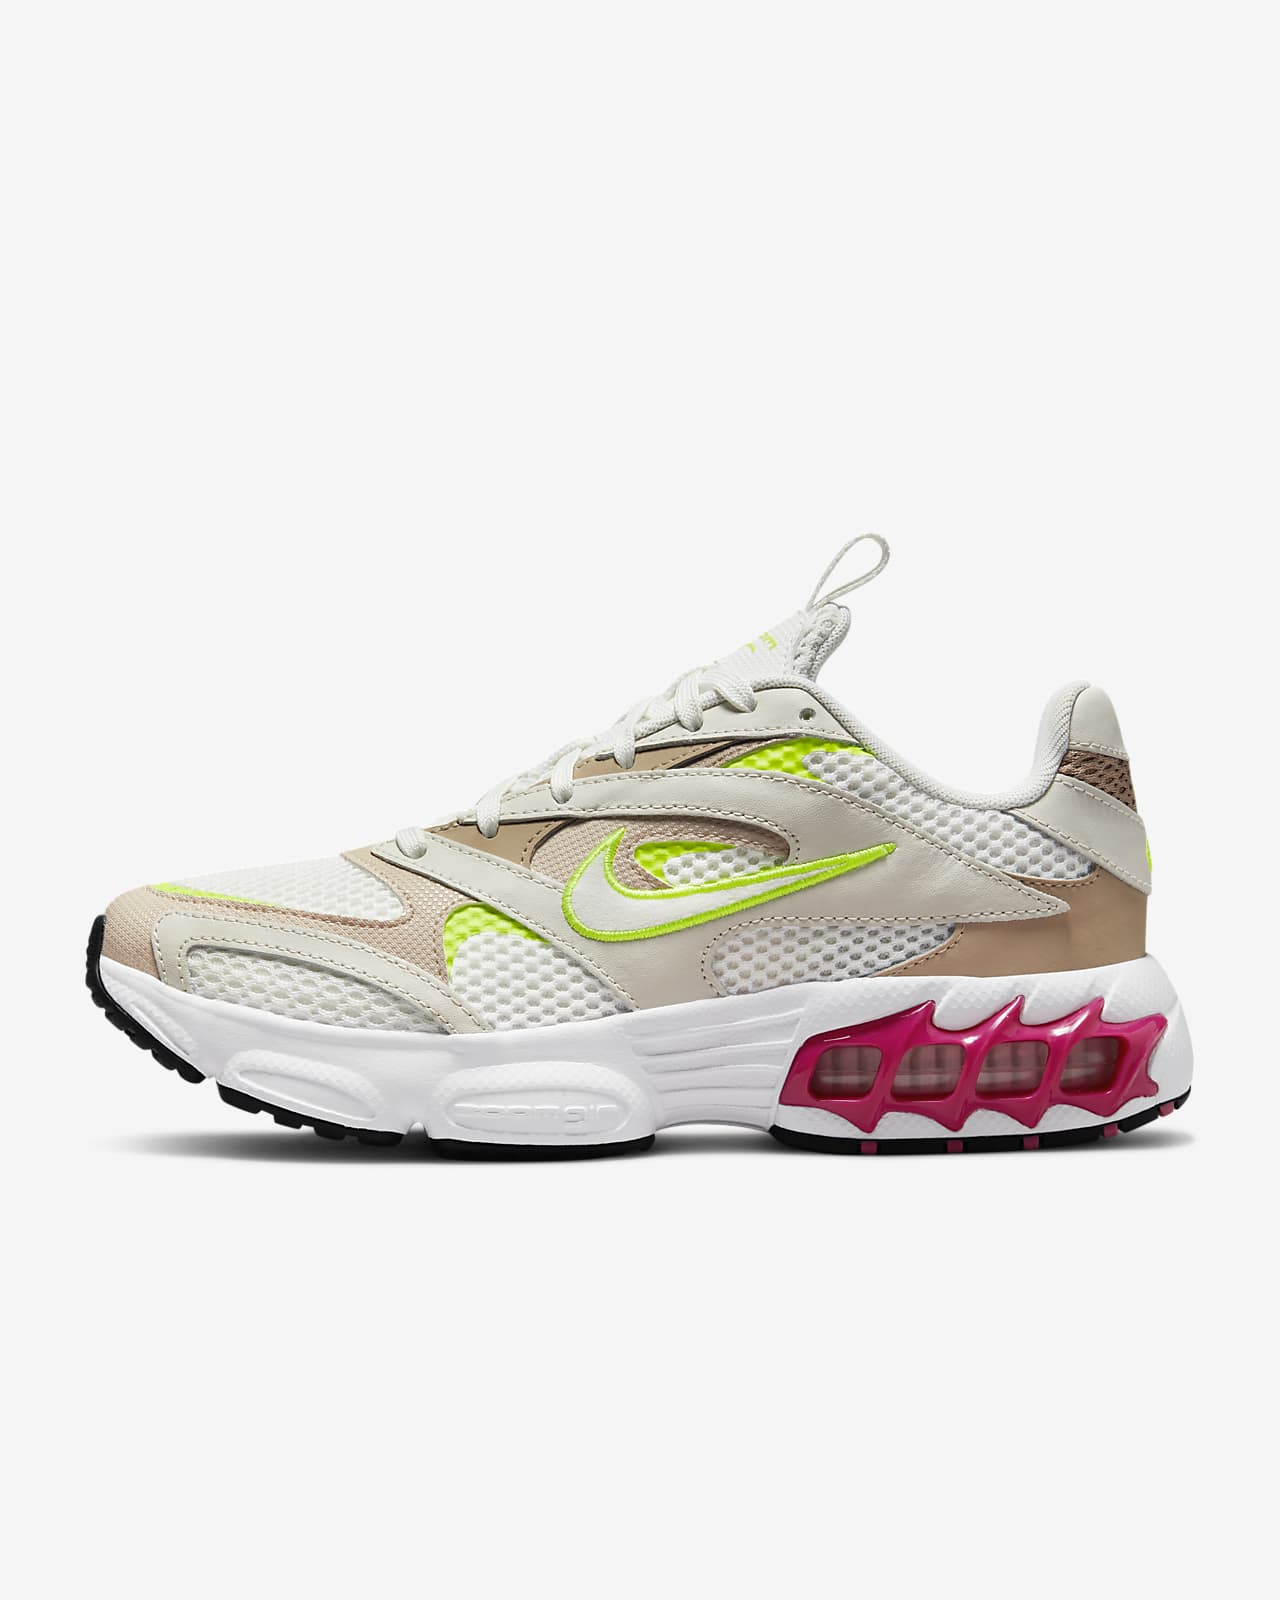 Nike Zoom Air Fire Women's Shoes